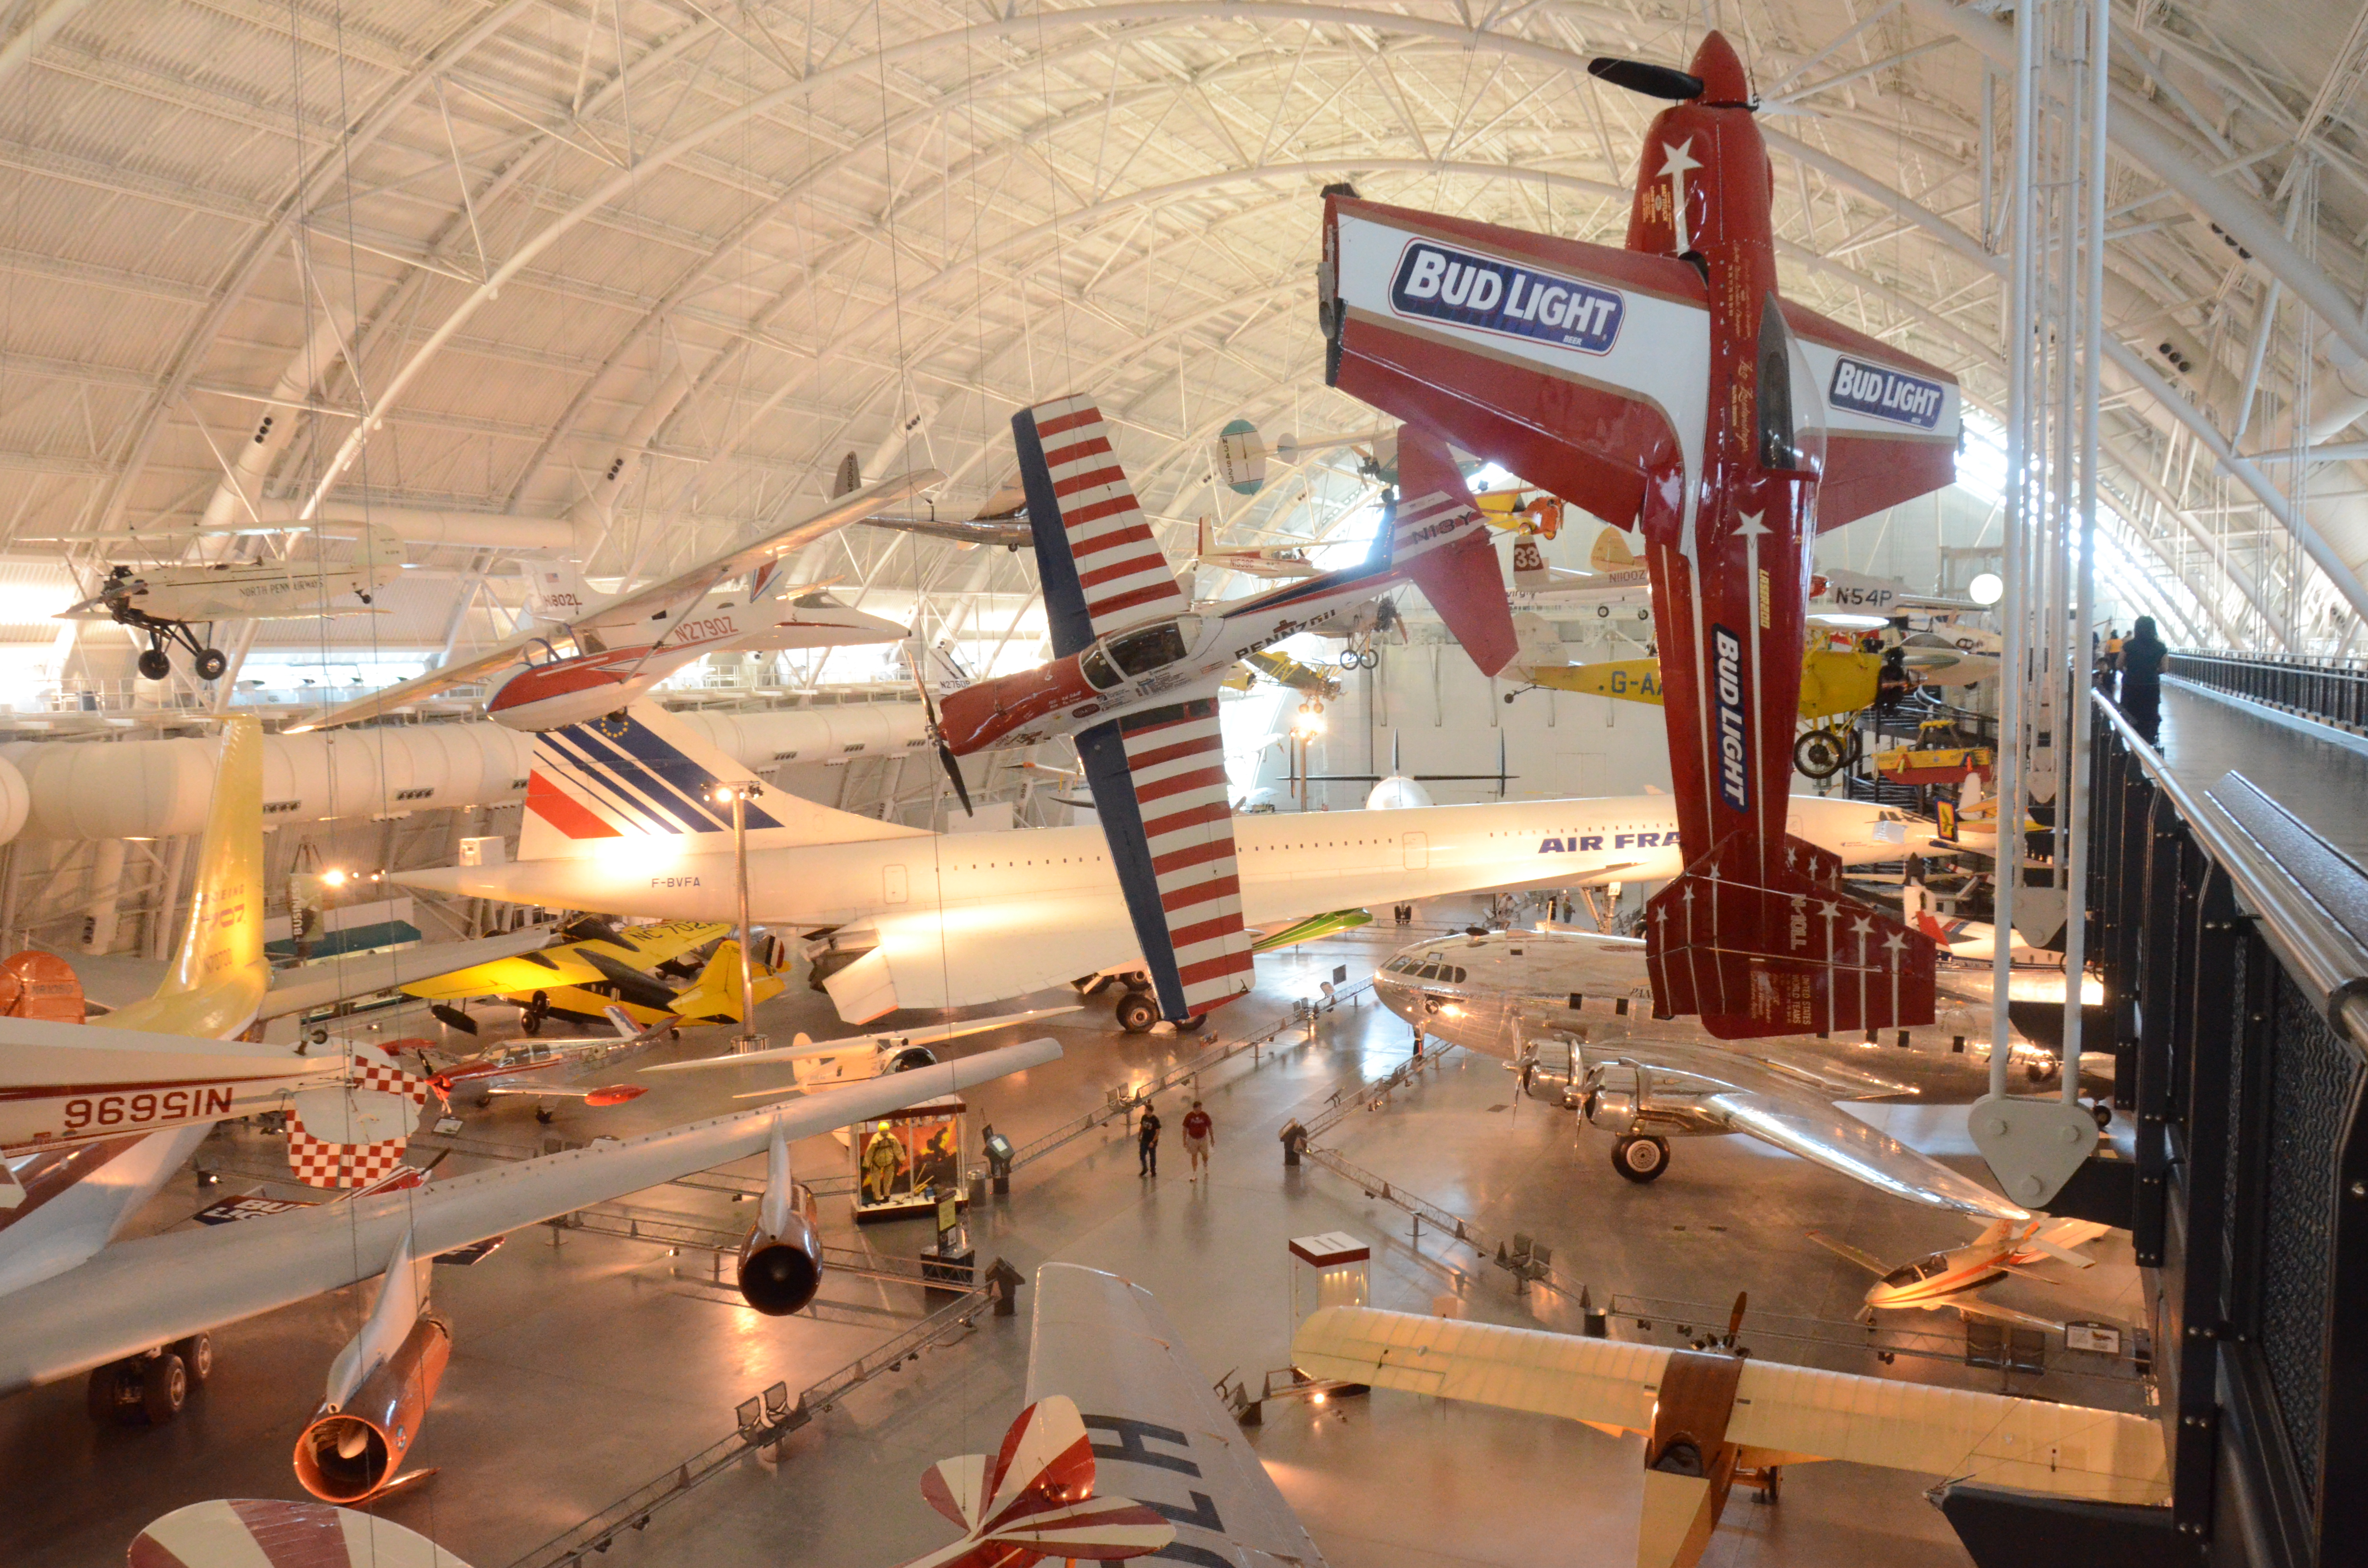 Steven F. Udvar-Hazy Center: South hangar panorama, including De Havilland Canada DHC-1A Chipmunk Pennzoil Special, Loudenslager Laser 200, and Air France Concorde